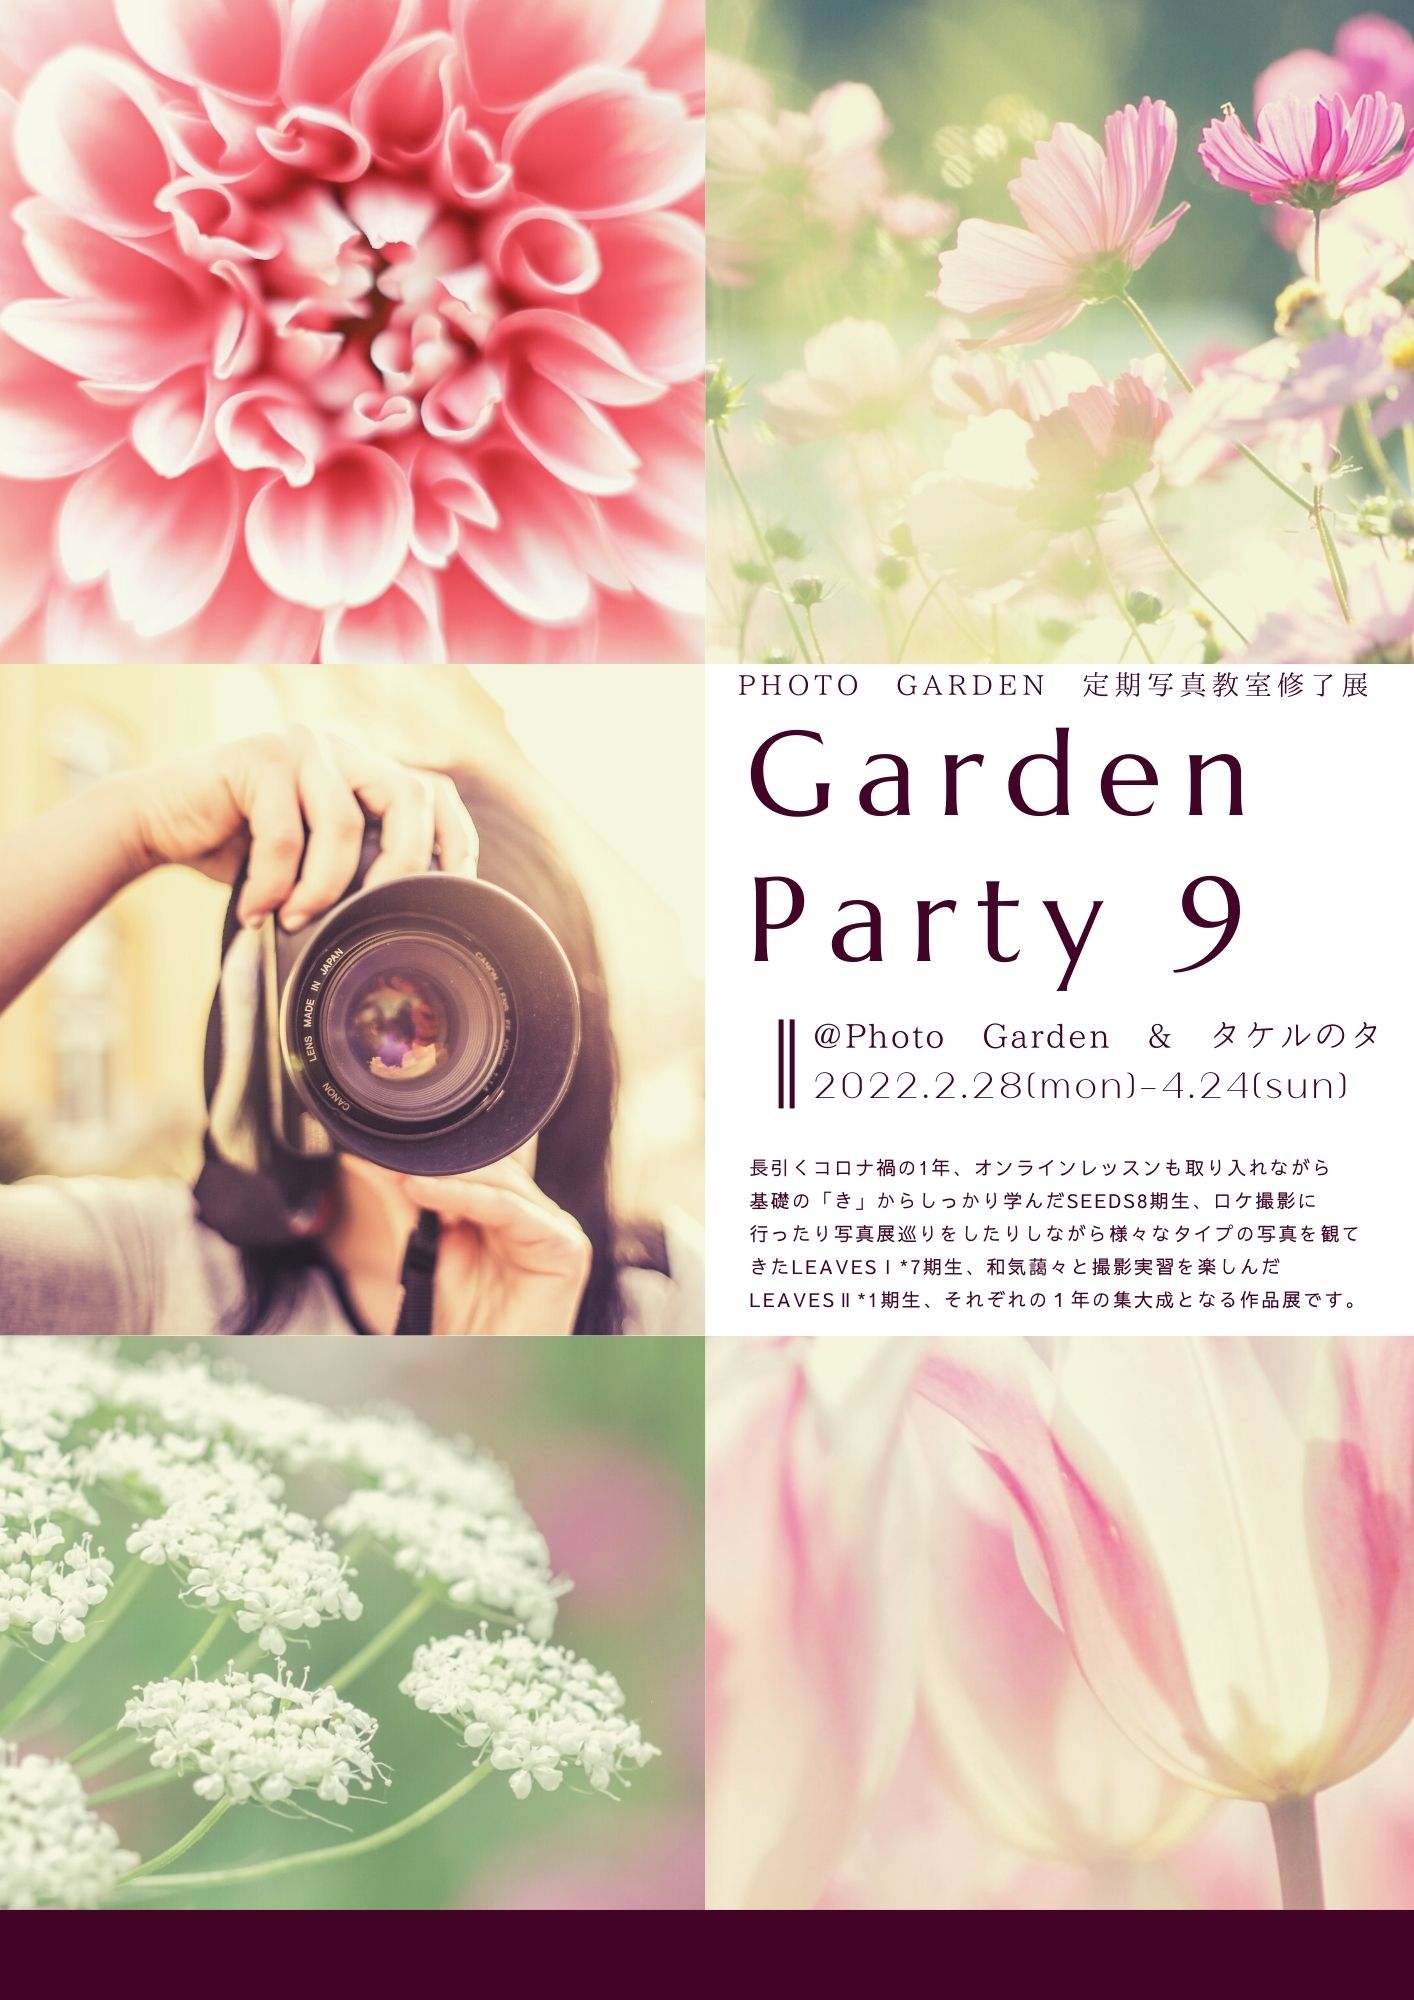 Garden Party 9th season ～PHOTO GARDEN 定期写真教室 LEAVES1＊7期生修了展